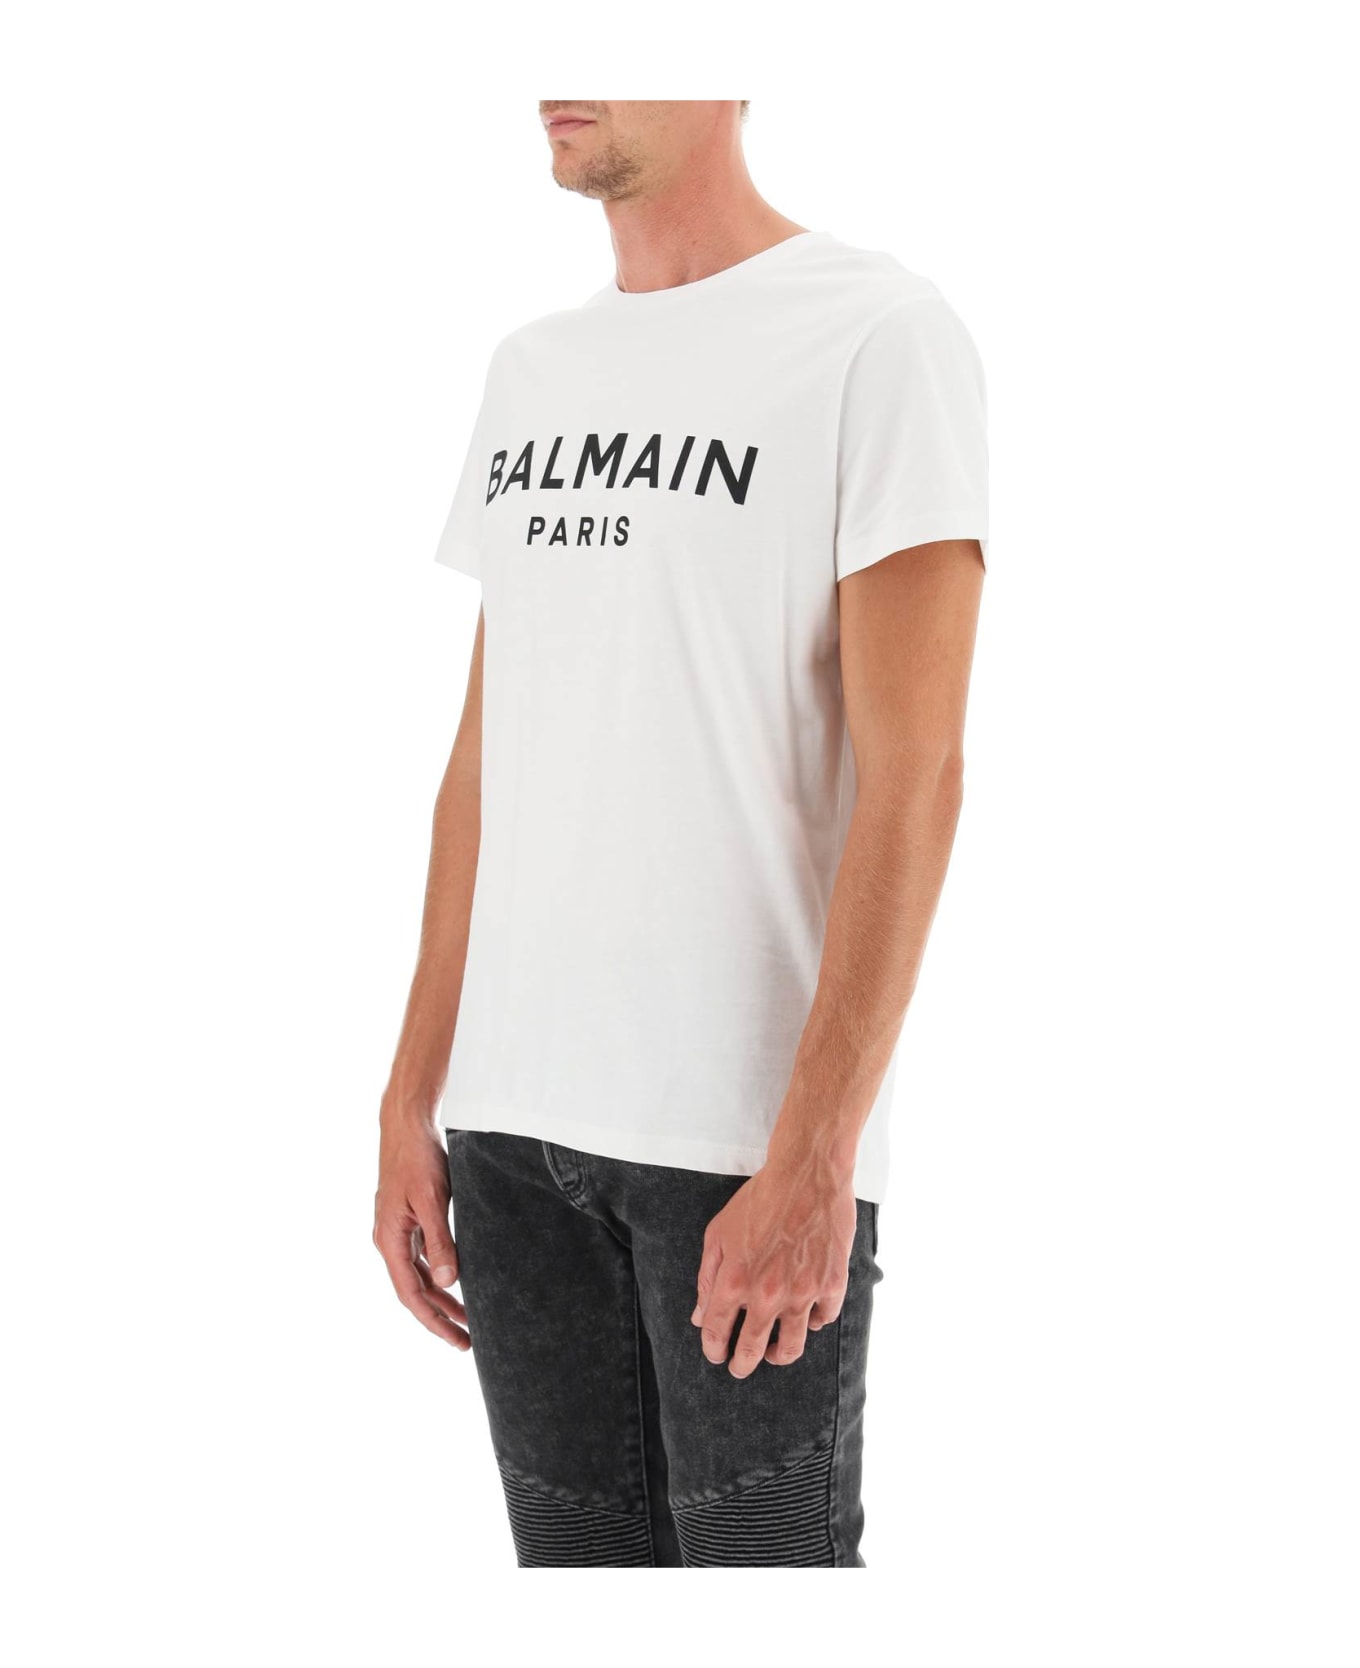 Balmain Logo Print T-shirt - BLANC/NOIR シャツ